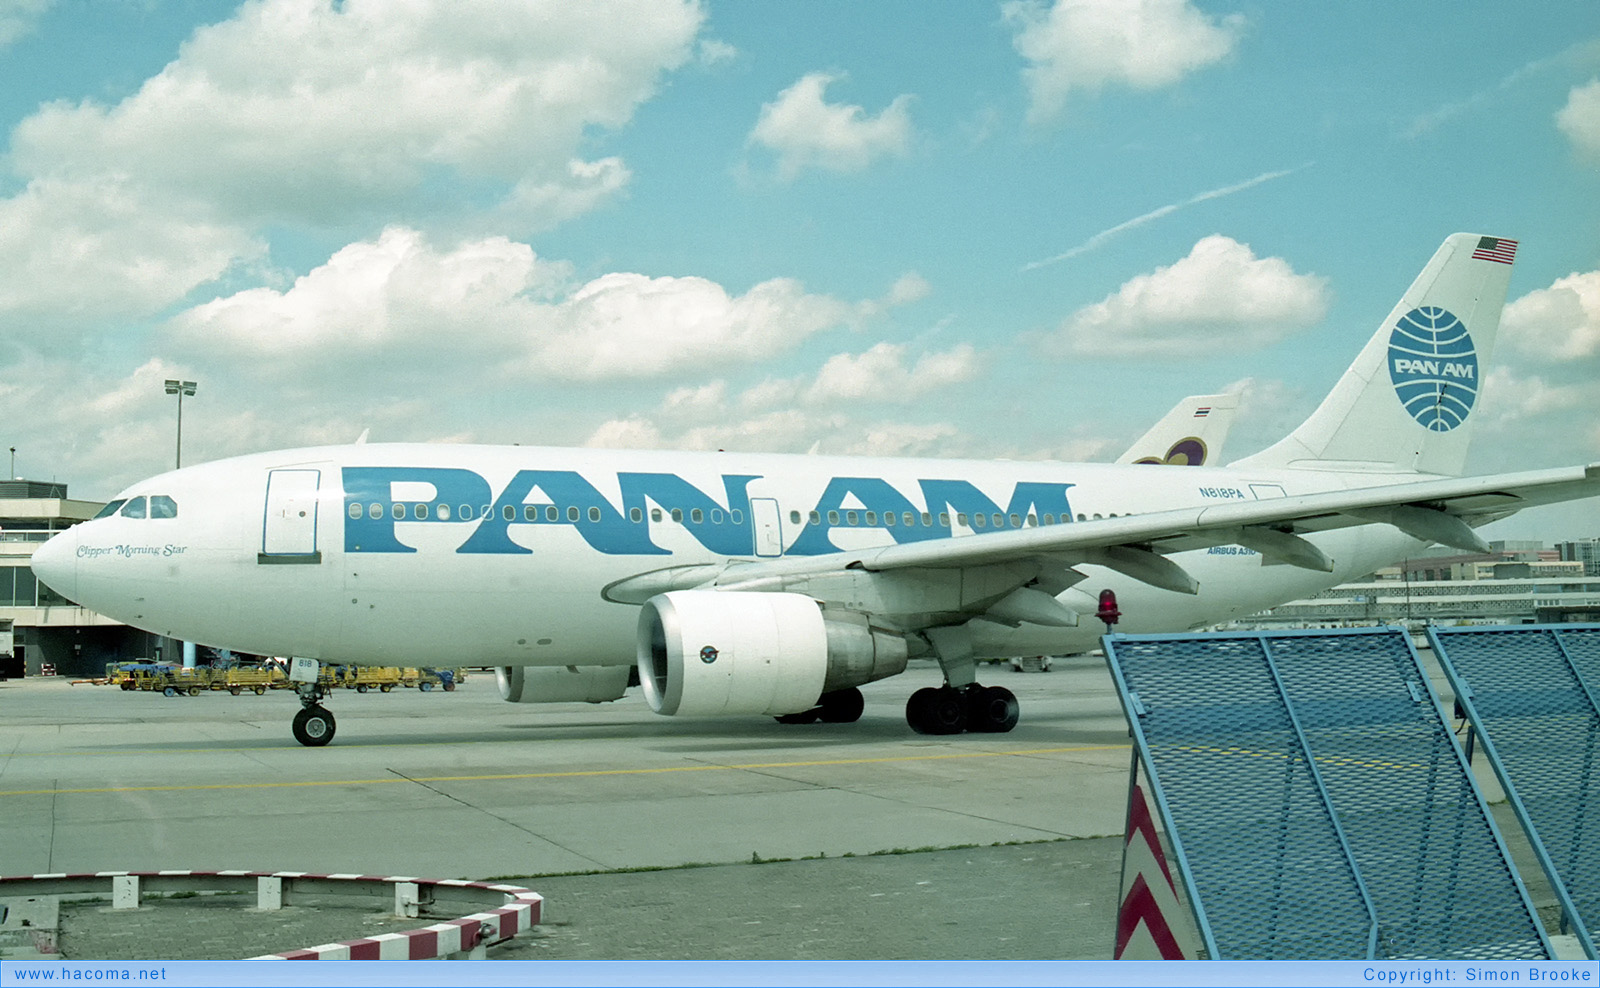 Photo of N818PA - Pan Am Clipper Morning Star - Frankfurt International Airport - Jun 23, 1991